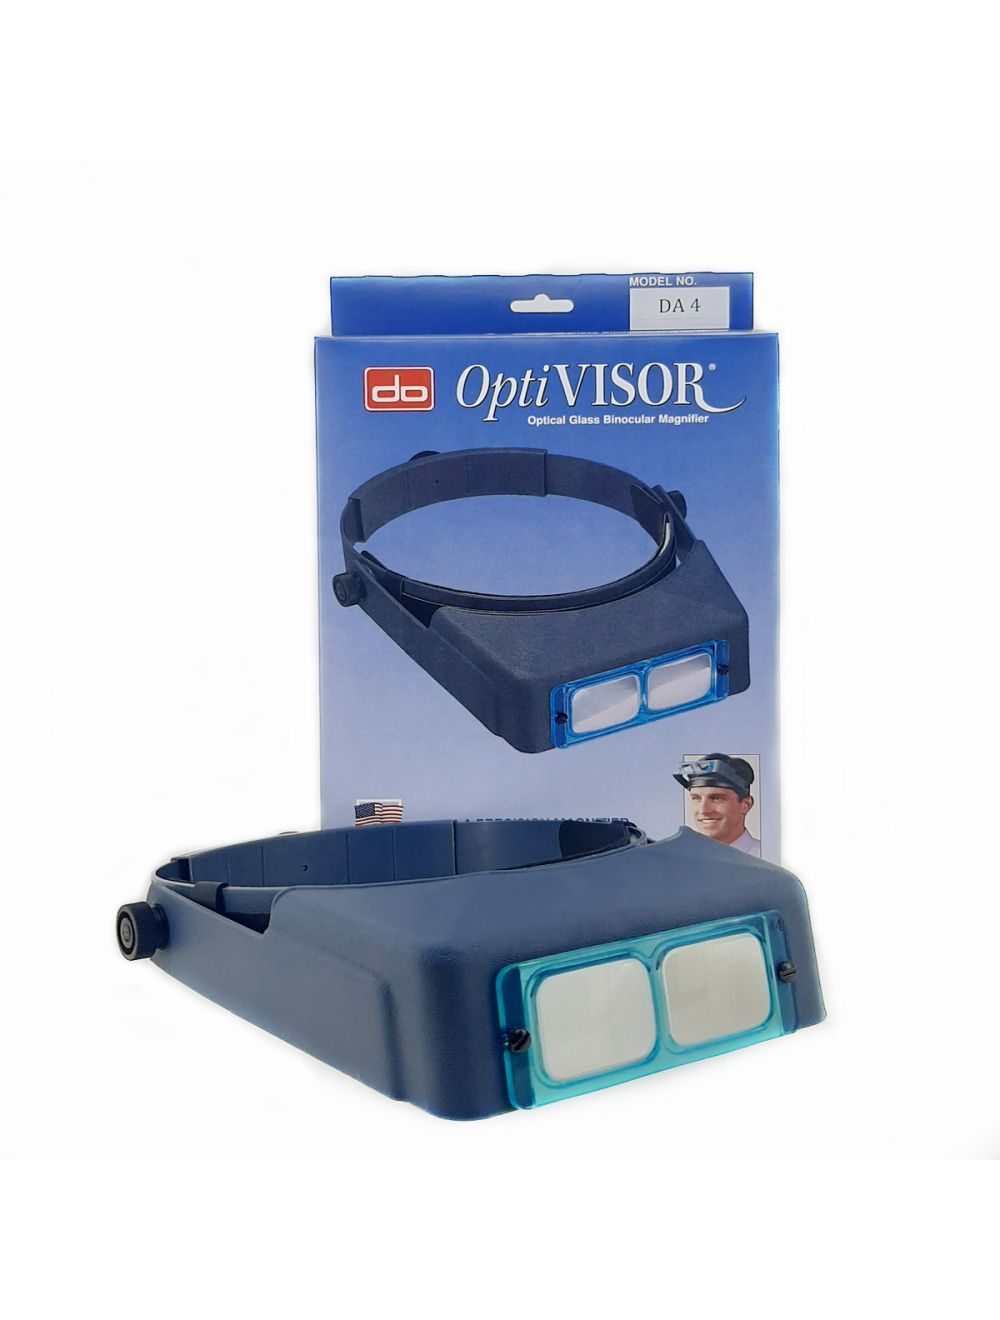 OptiVisor Glass Binocular Magnifier